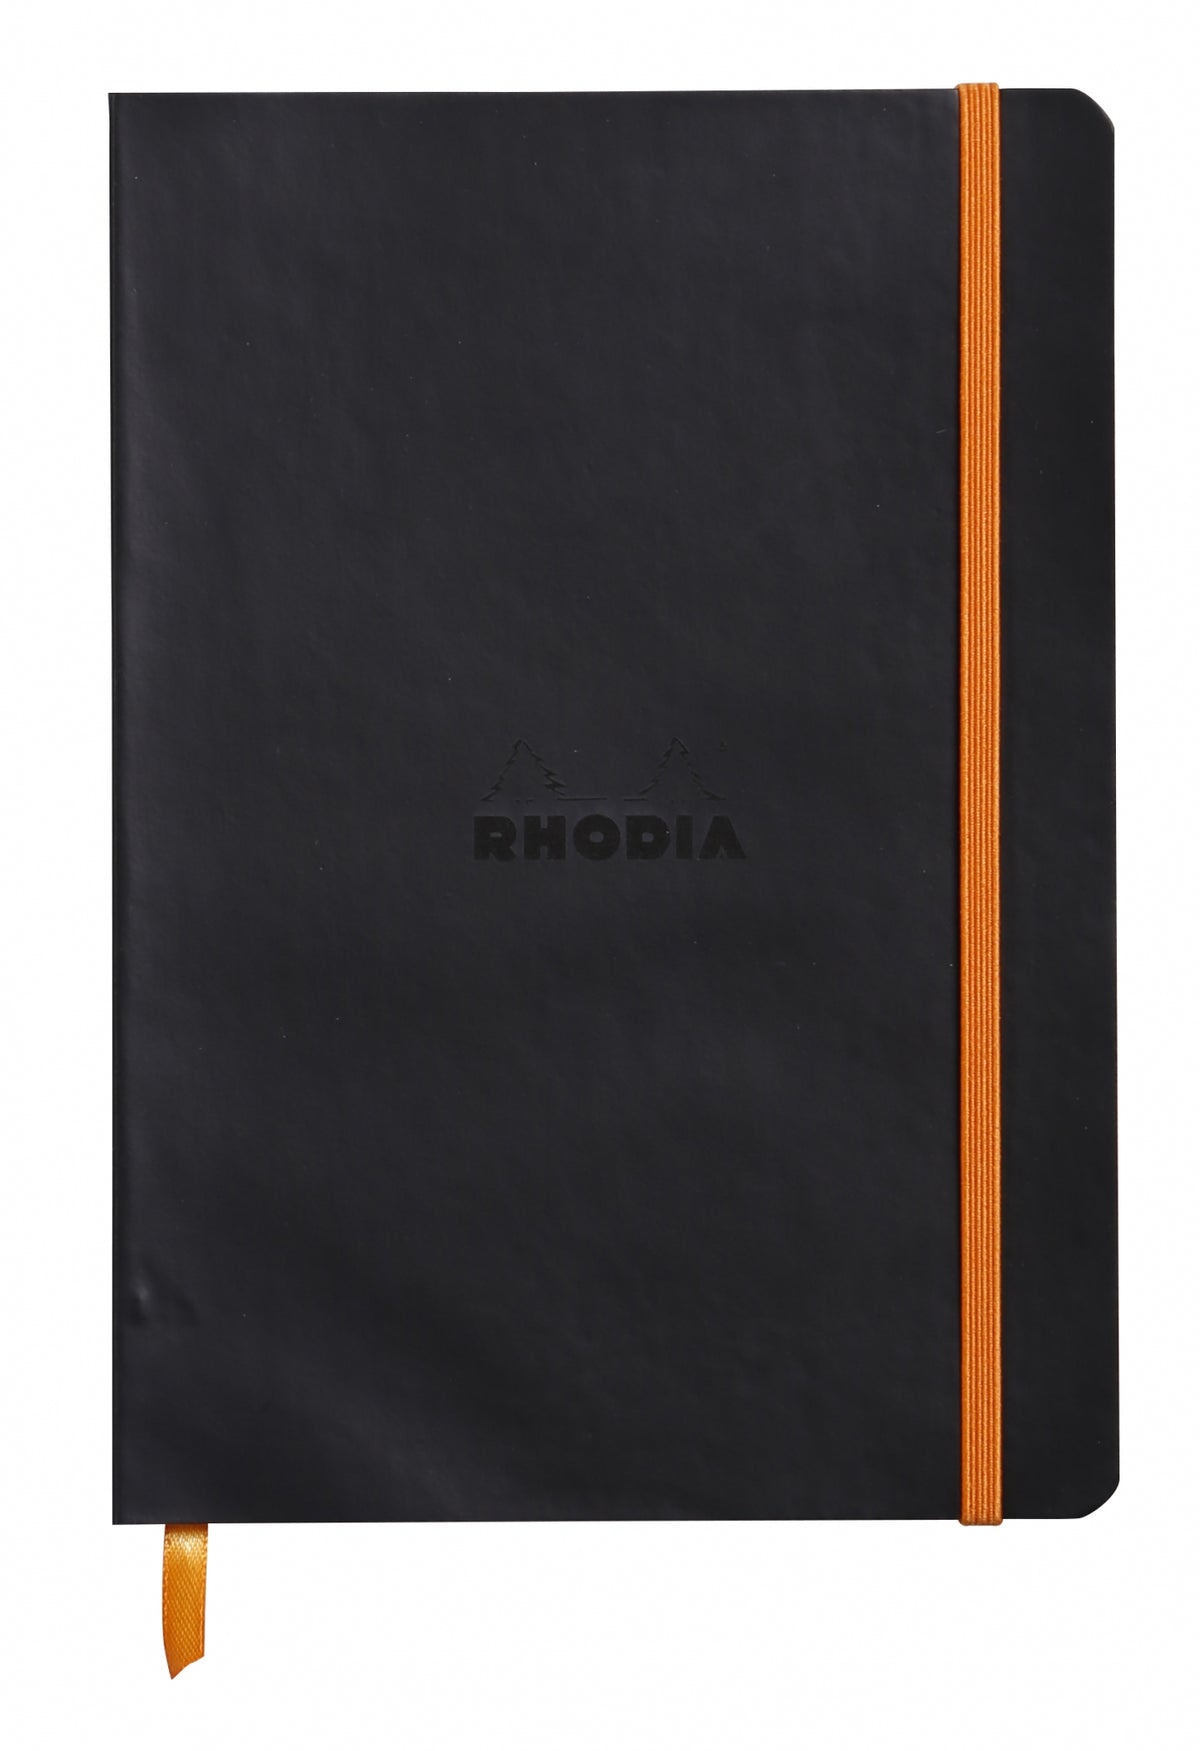 Rhodia Rhodiarama Webnotebook Softcover 9.75'" x 7.5" - Black